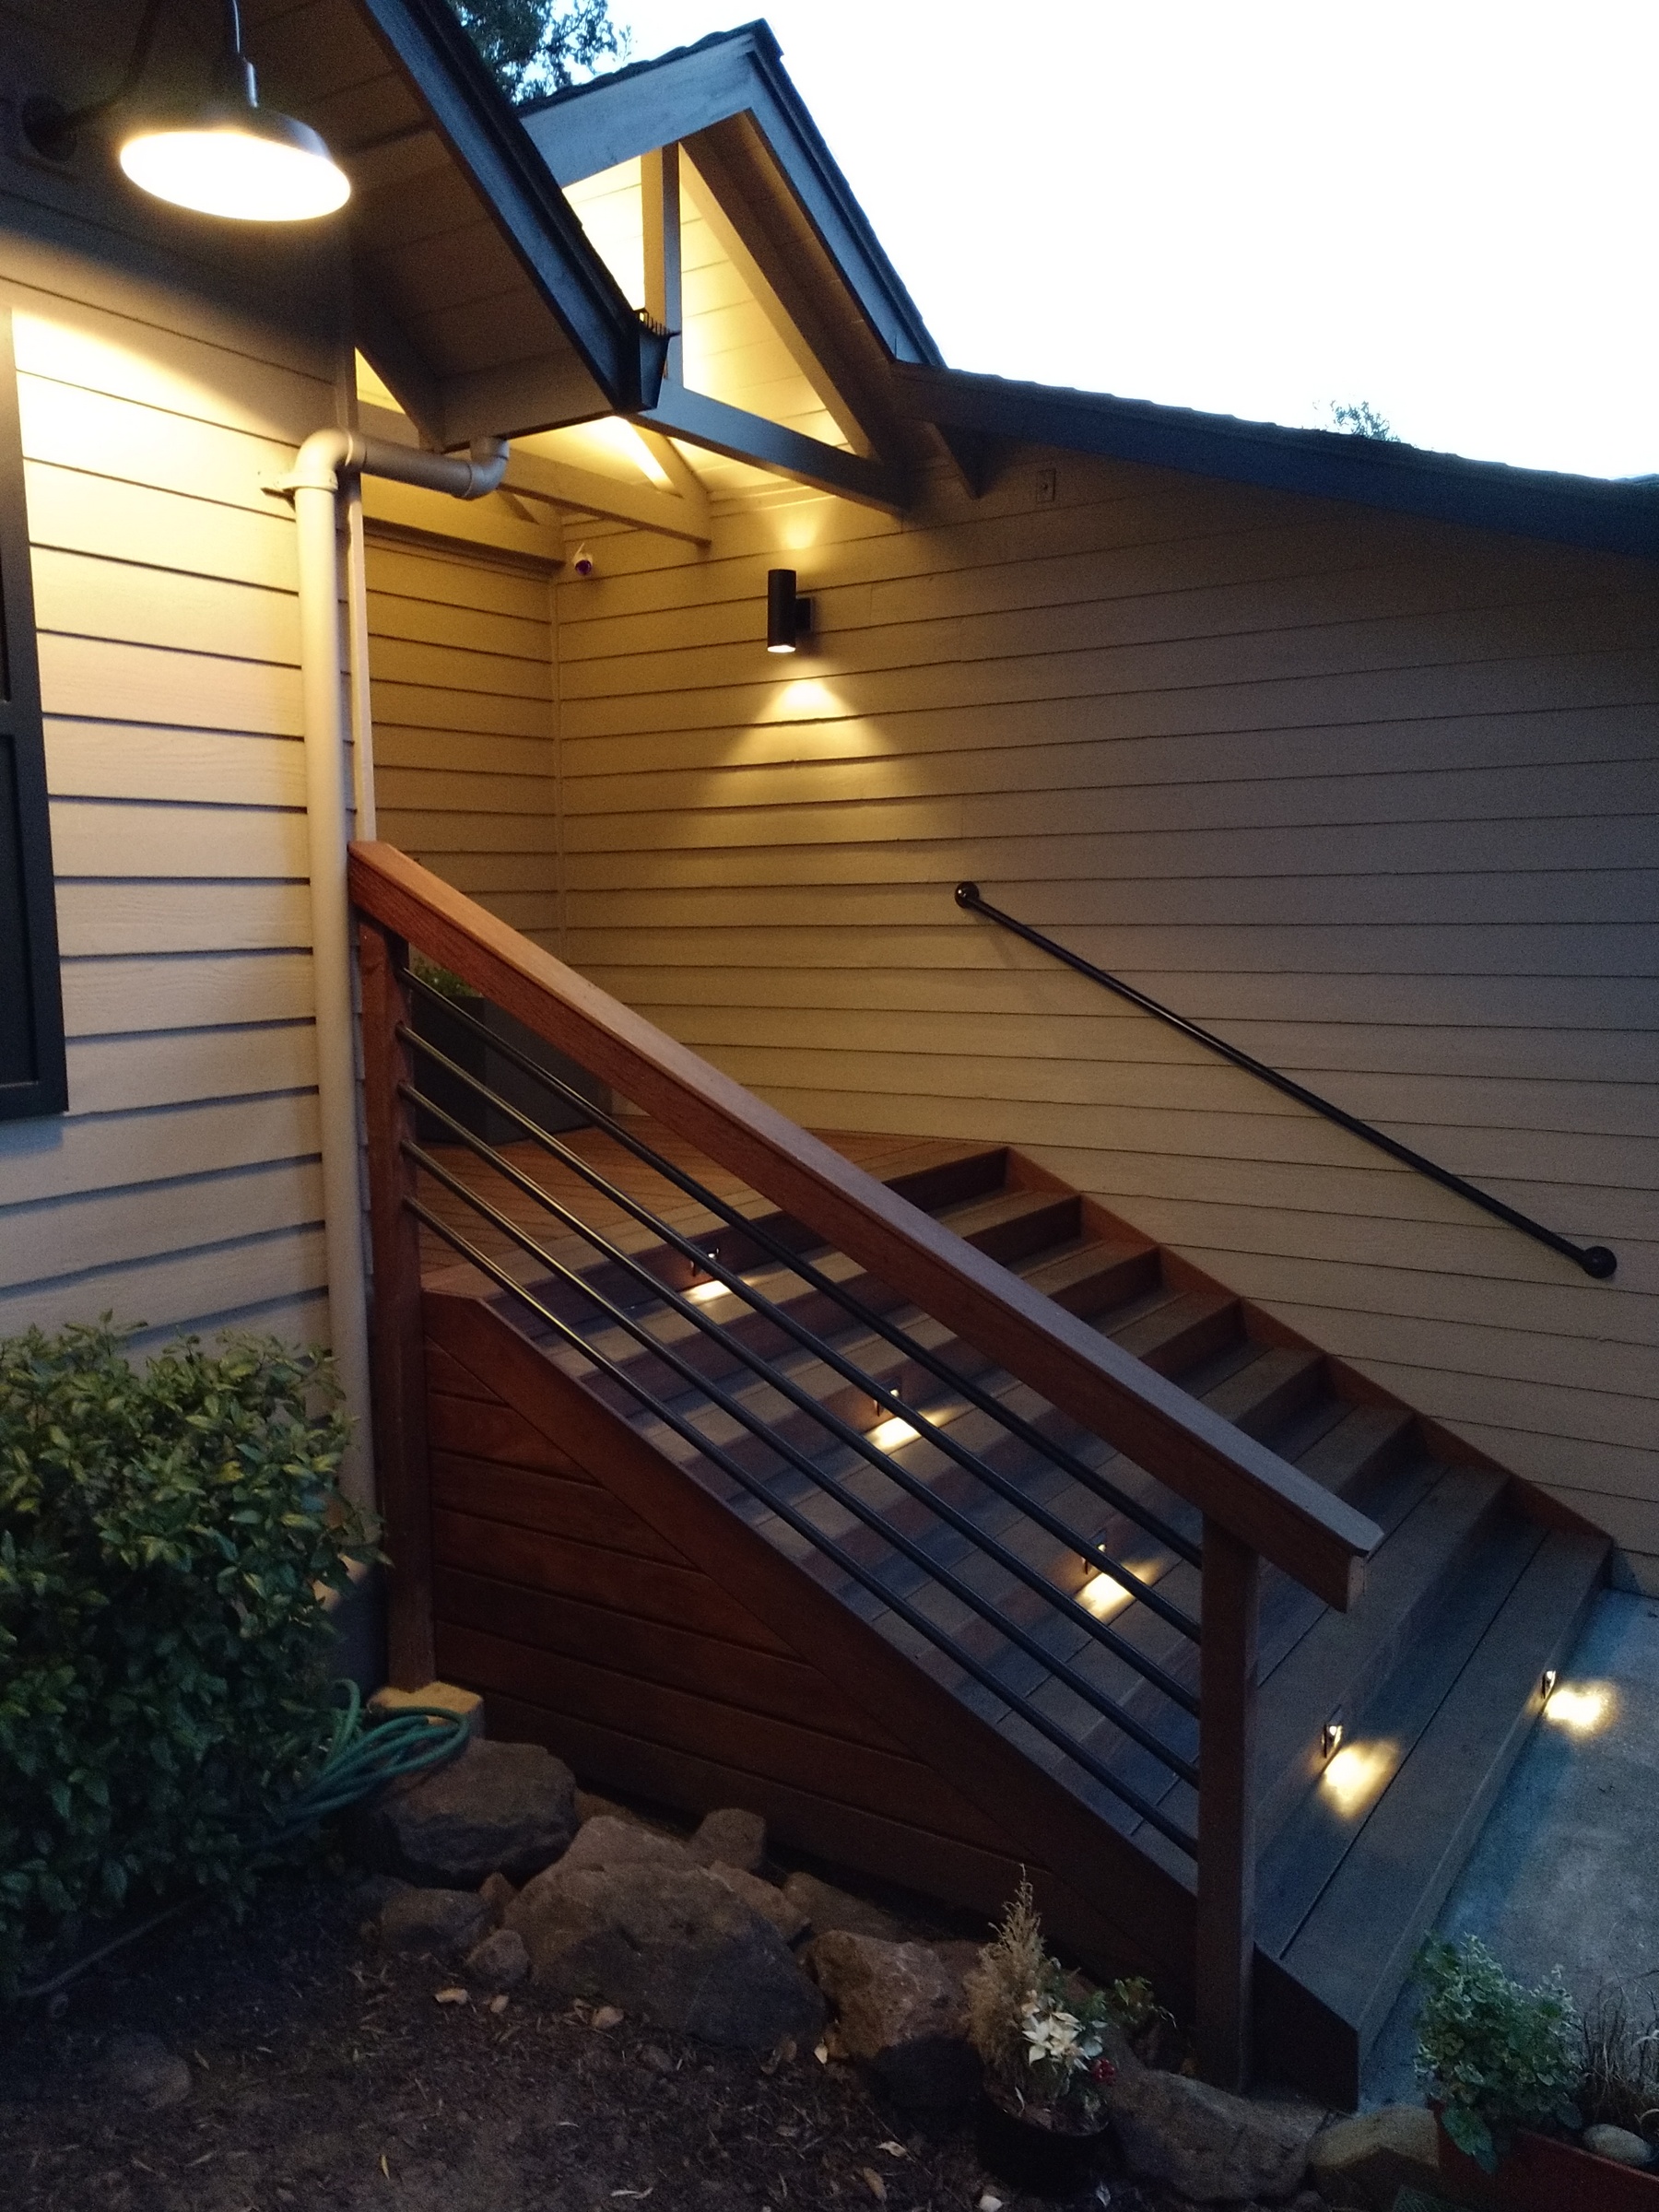 Remodeled entry - roof, deck, railing, lighting